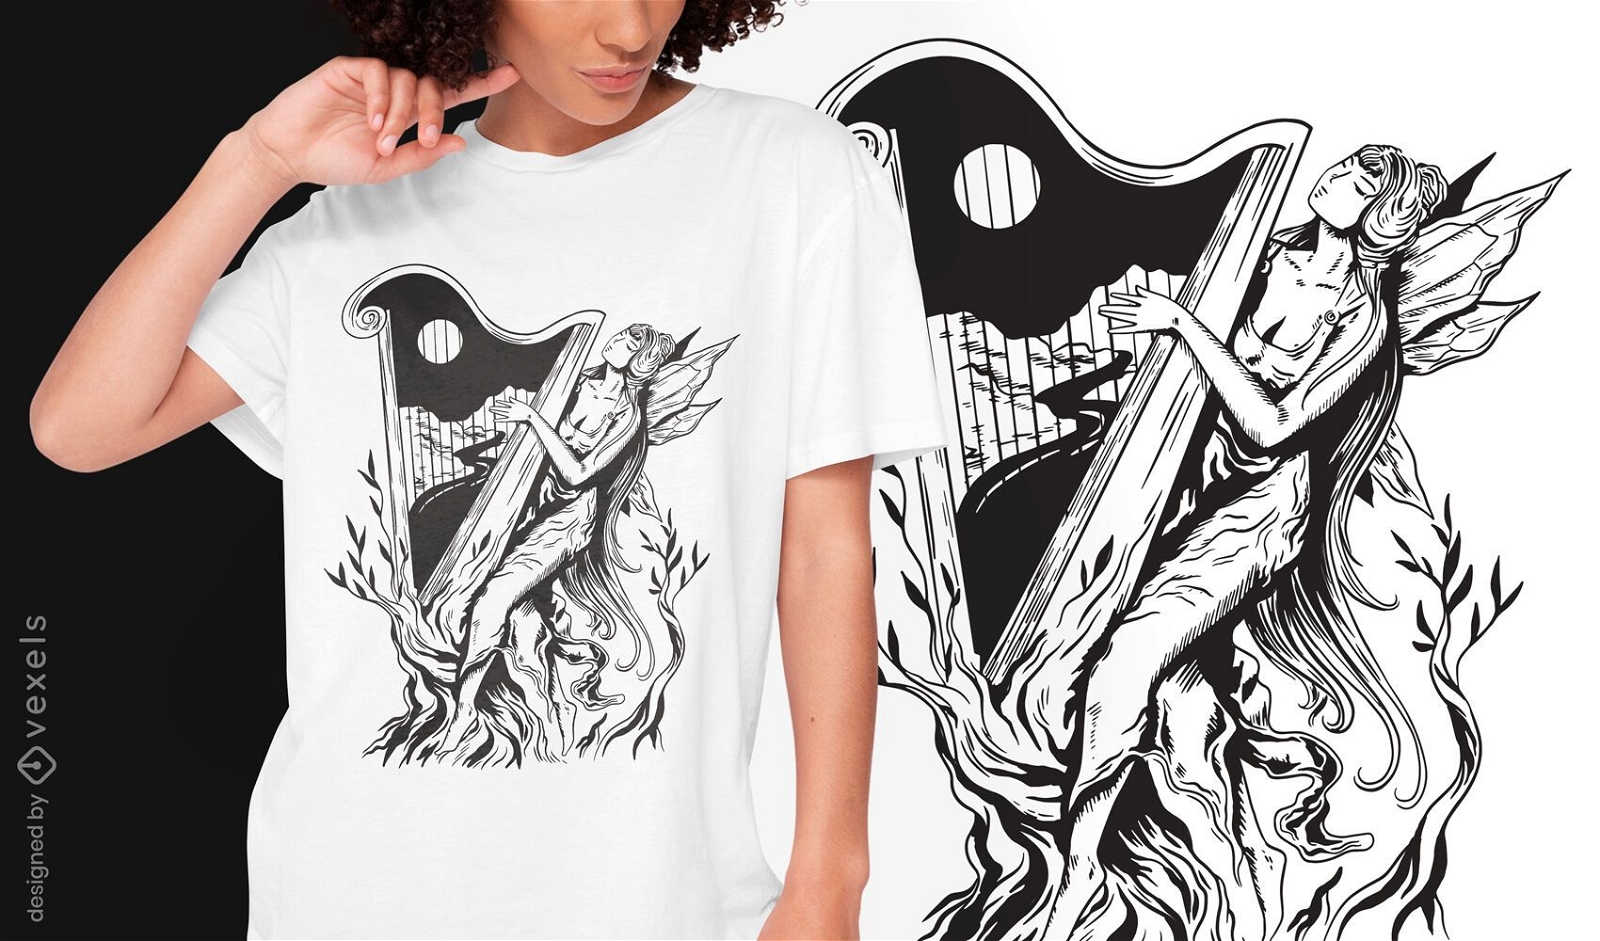 Fairy music dark art nouveau t-shirt design